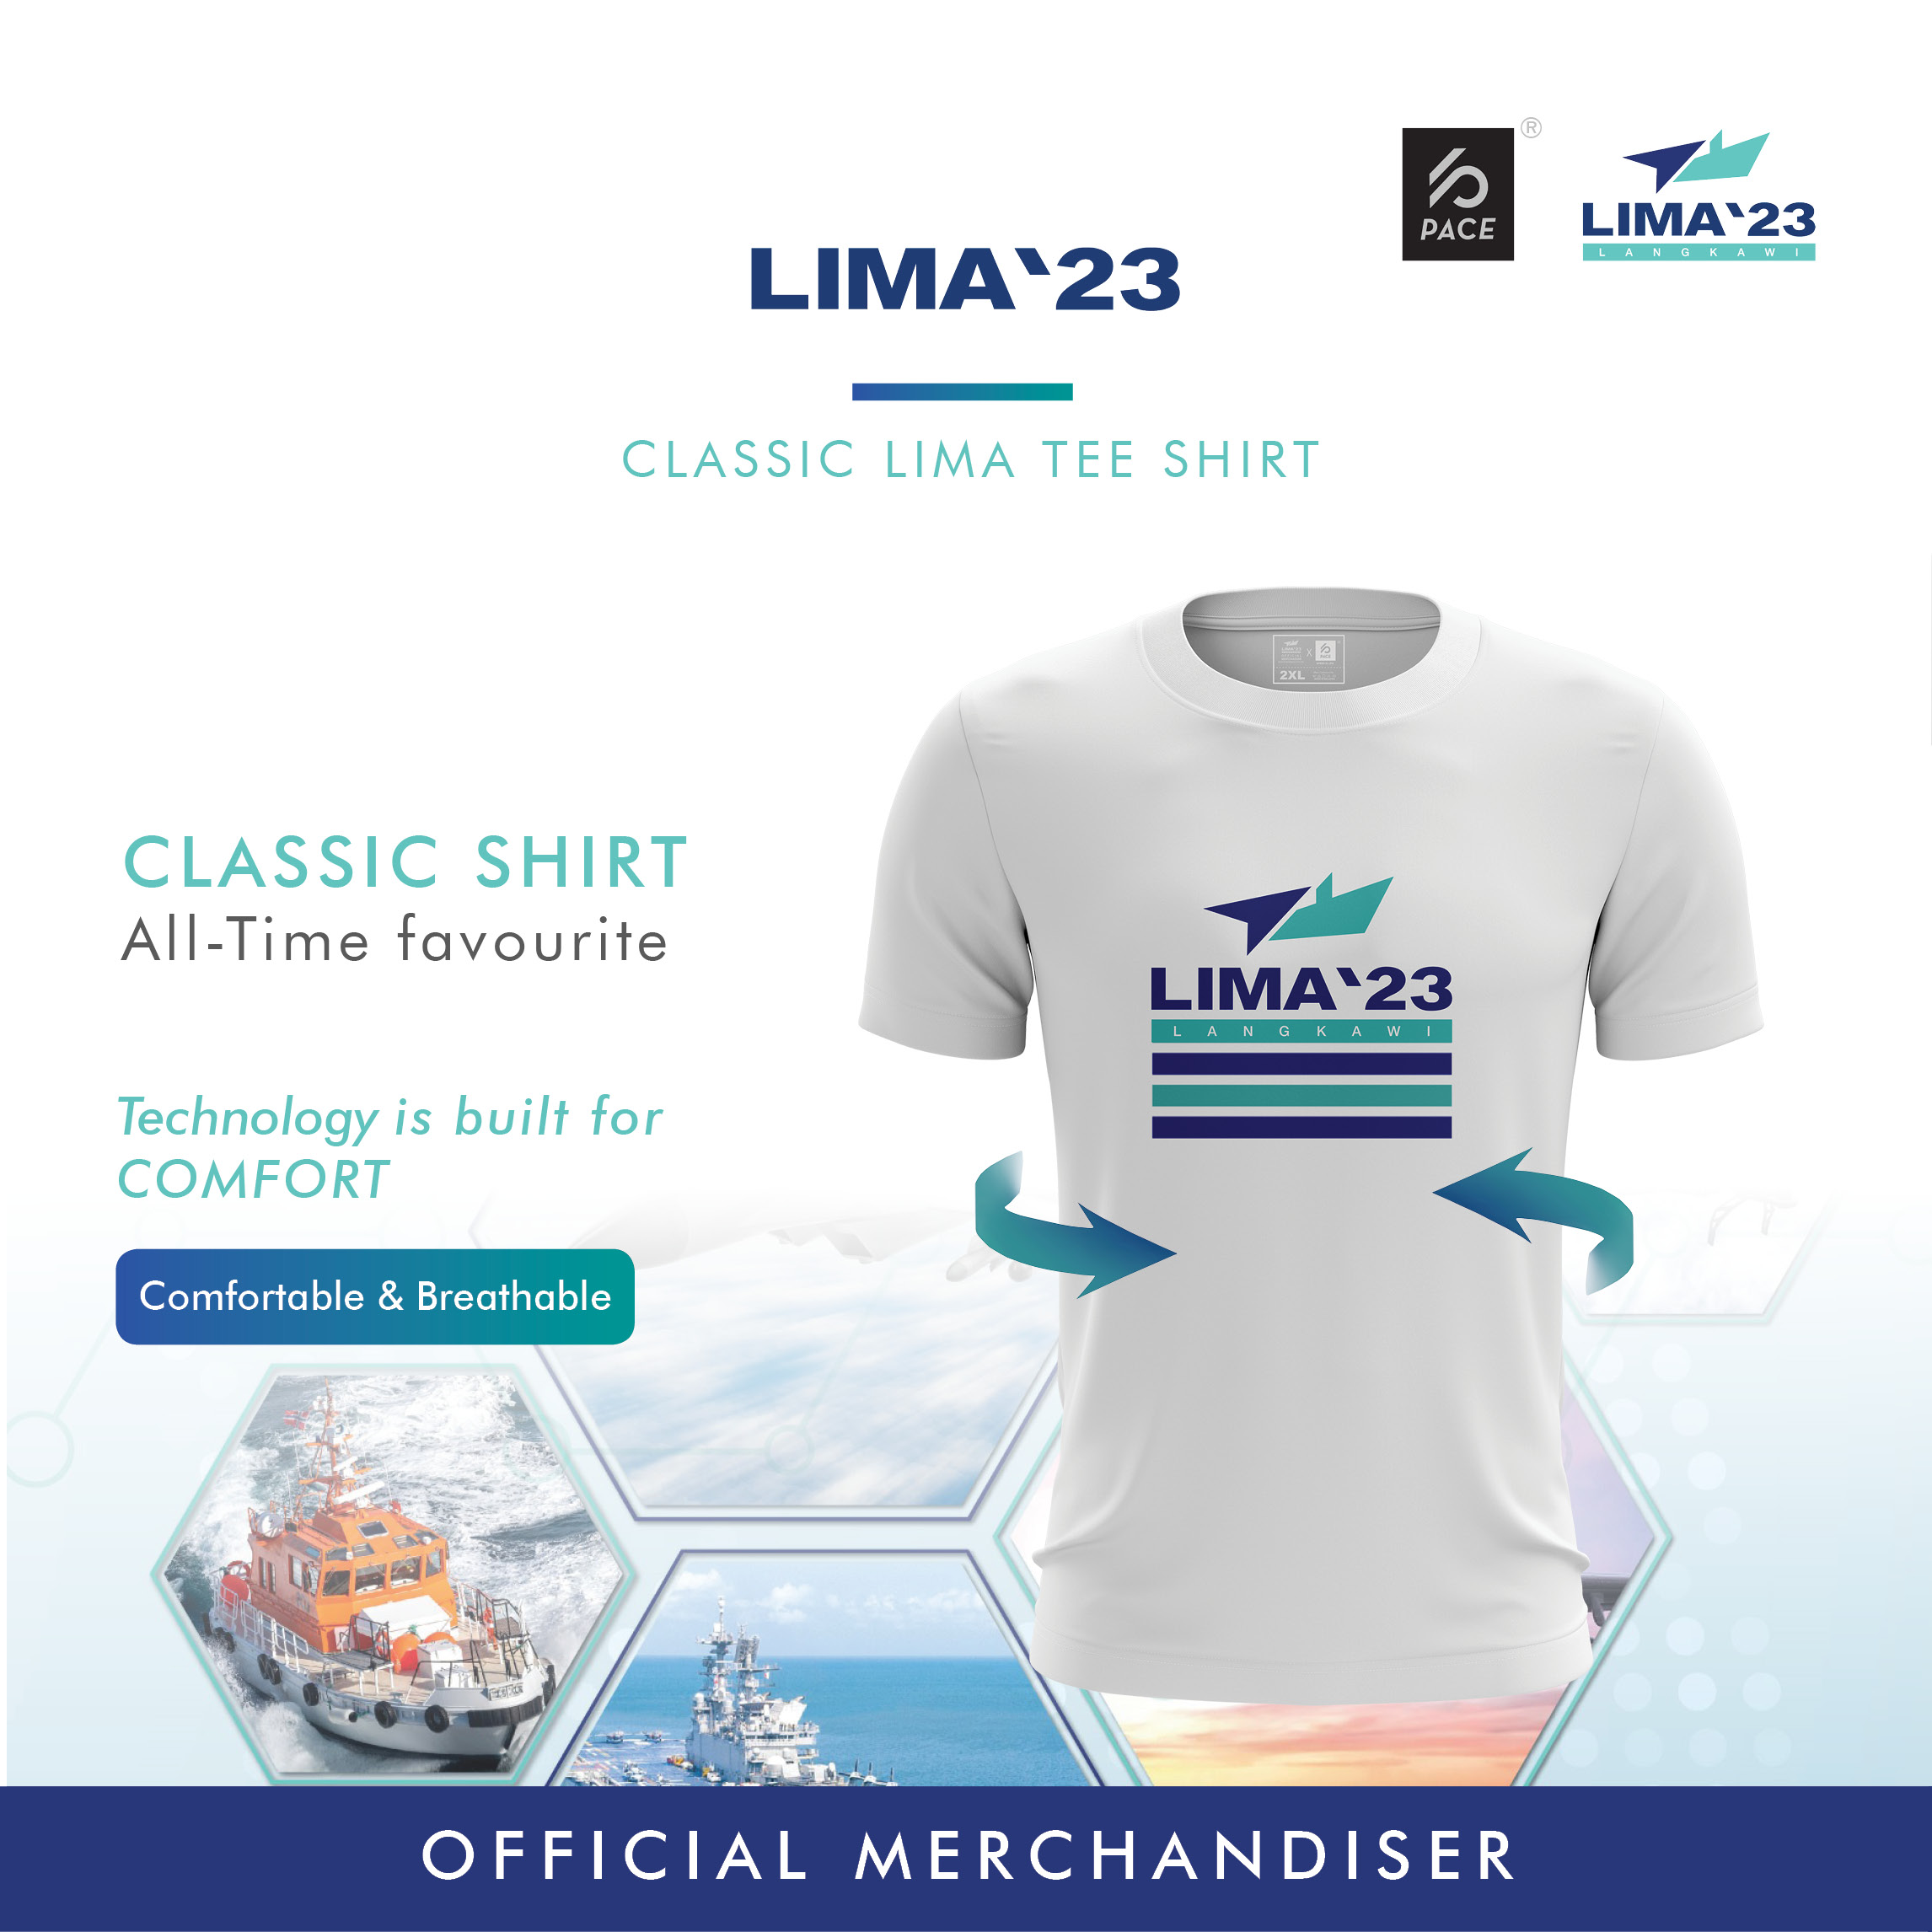 LIMA23 Classic Tee Shirt